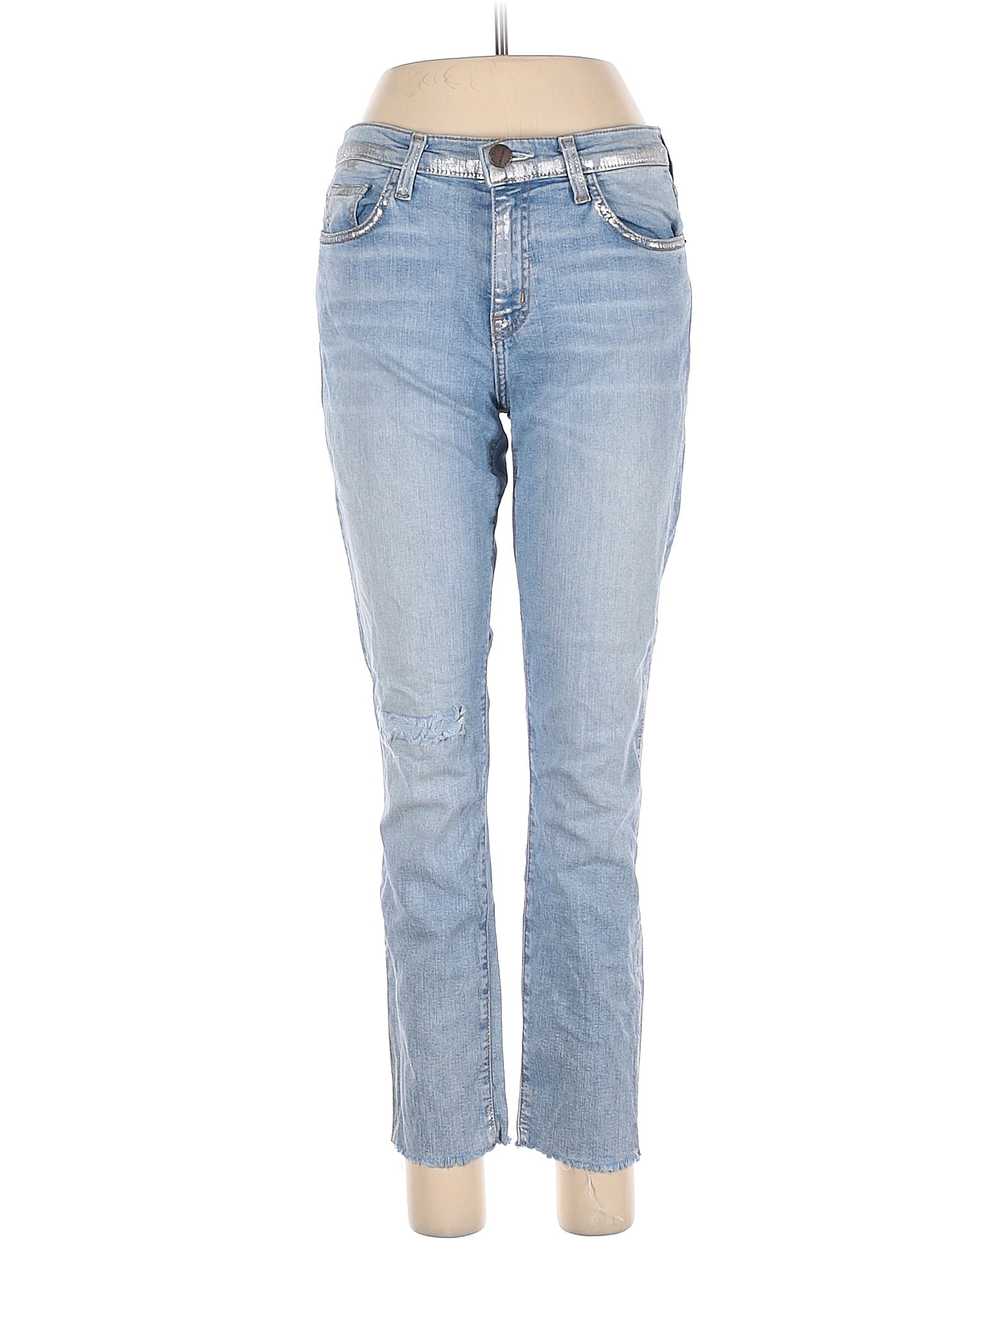 Current/Elliott Women Blue Jeans 28W - image 1